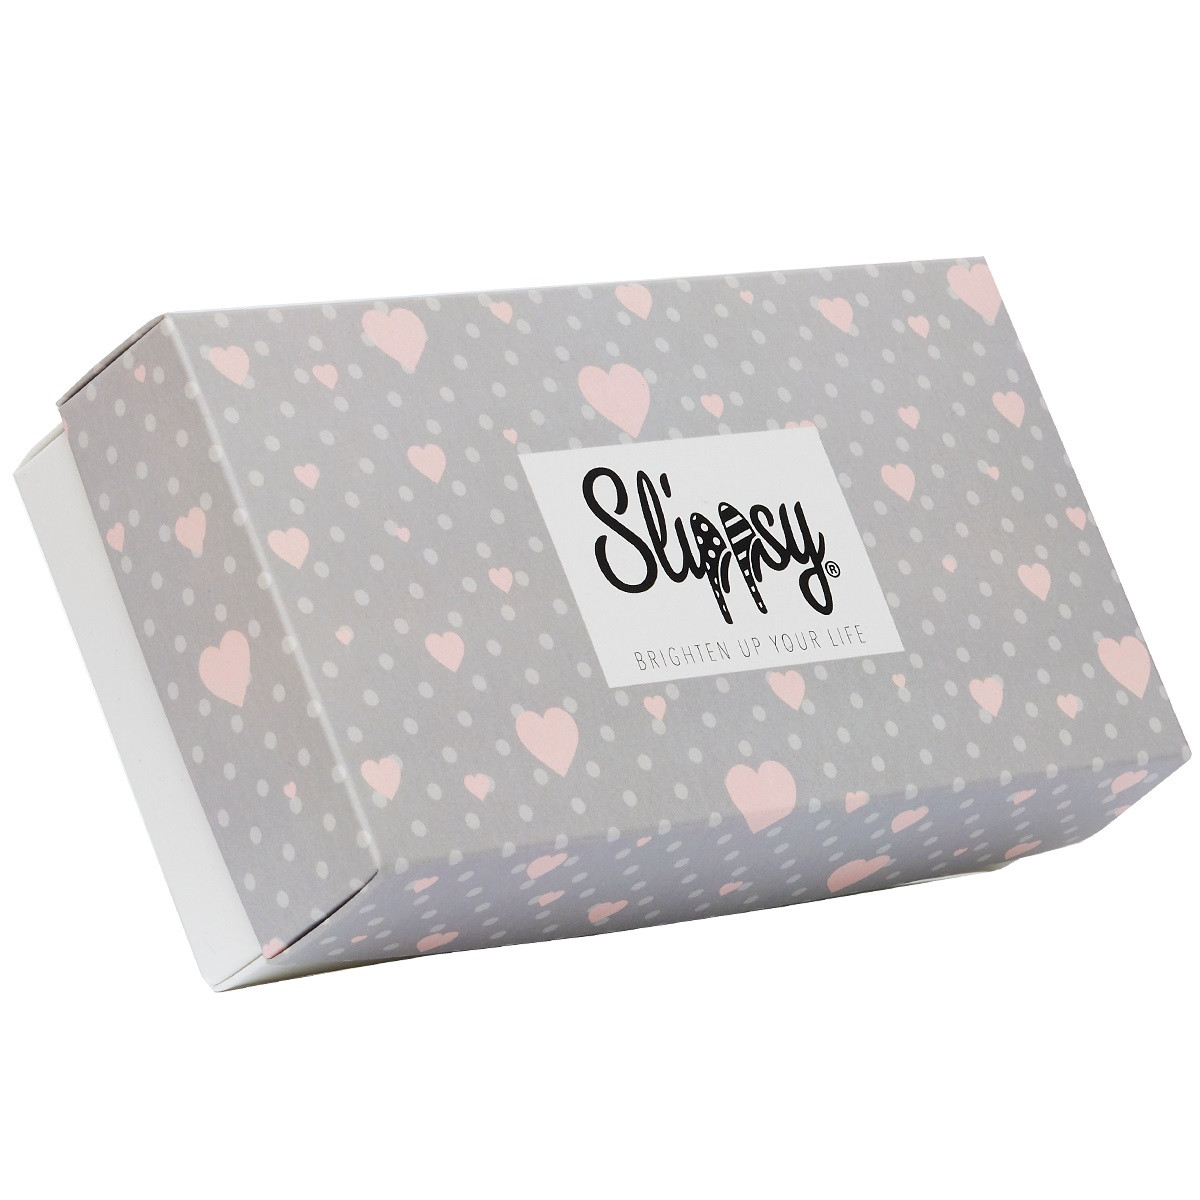 E-shop Slippsy Darling box set